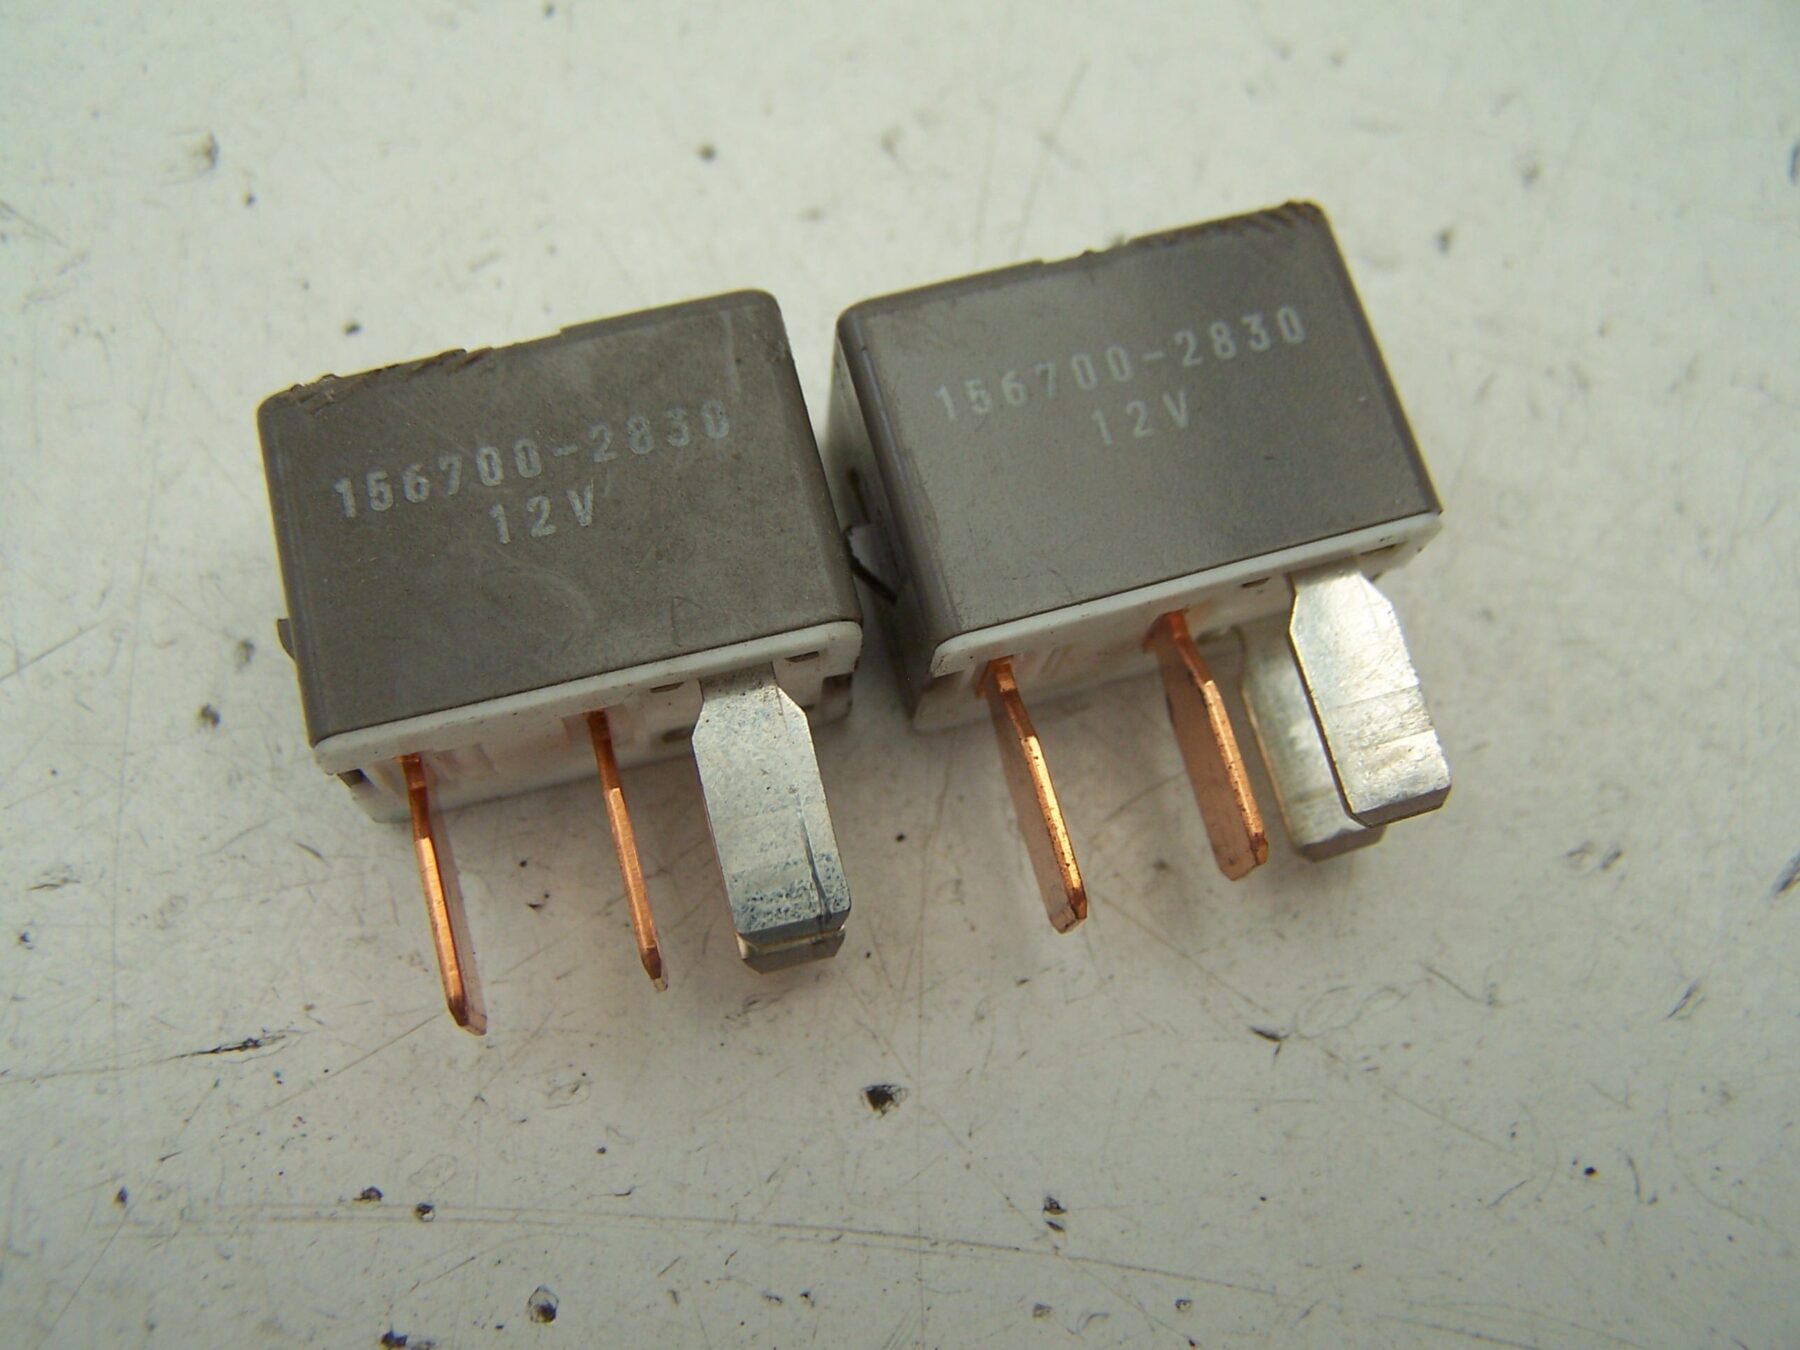 Daihatsu Charade Pair of relays 156700-2830 ( 2003-2006)